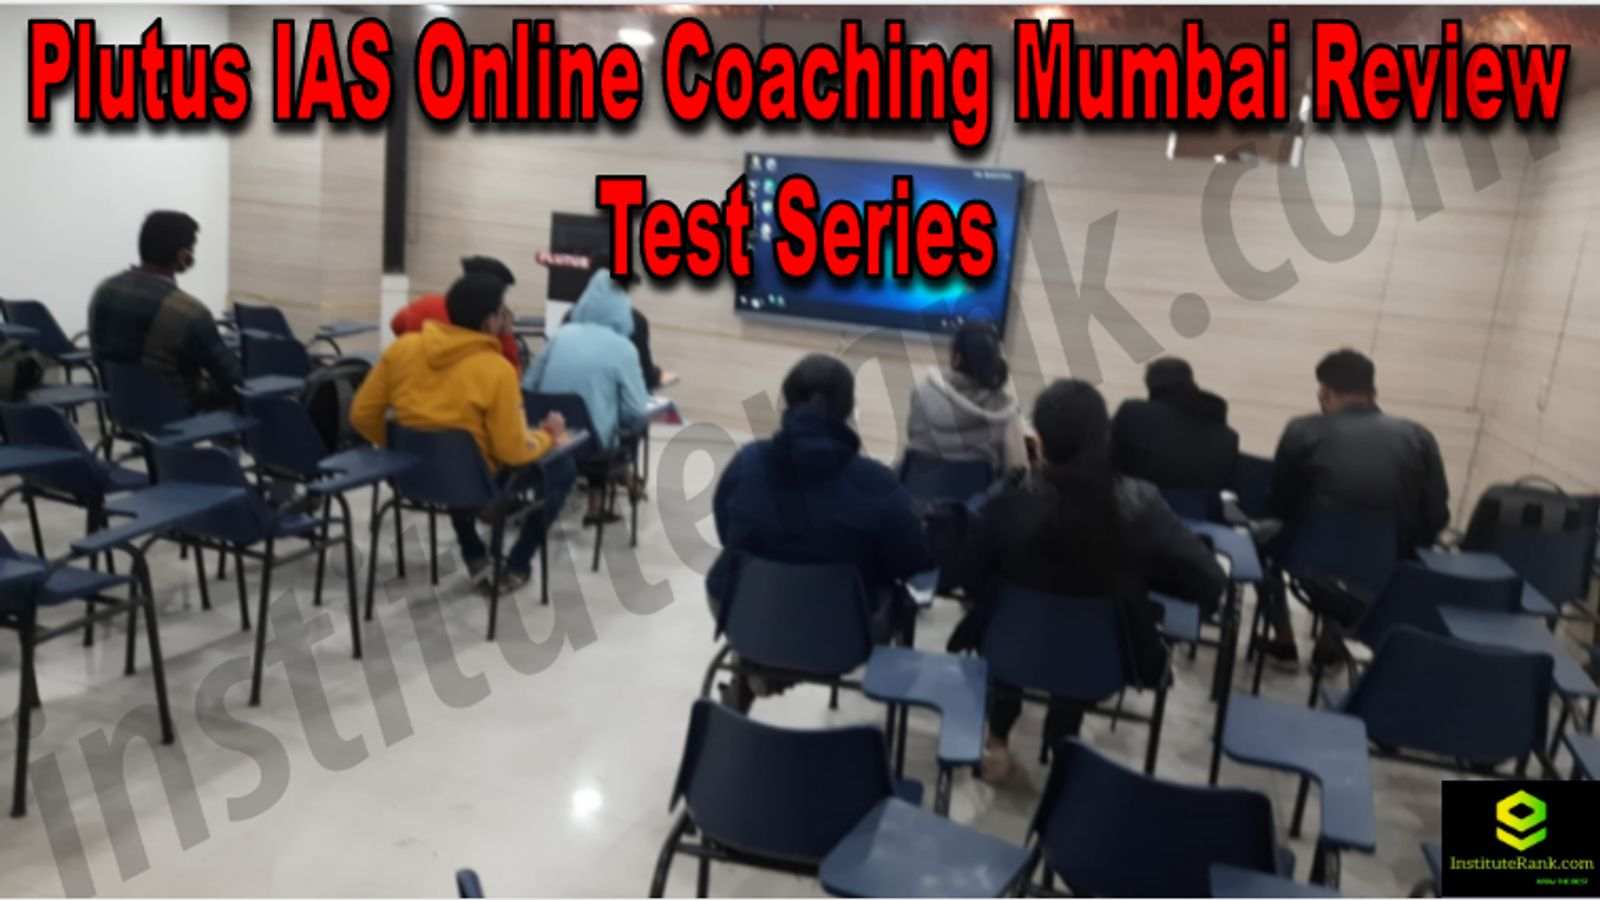 Plutus IAS Online Coaching Mumbai Reviews Test Series